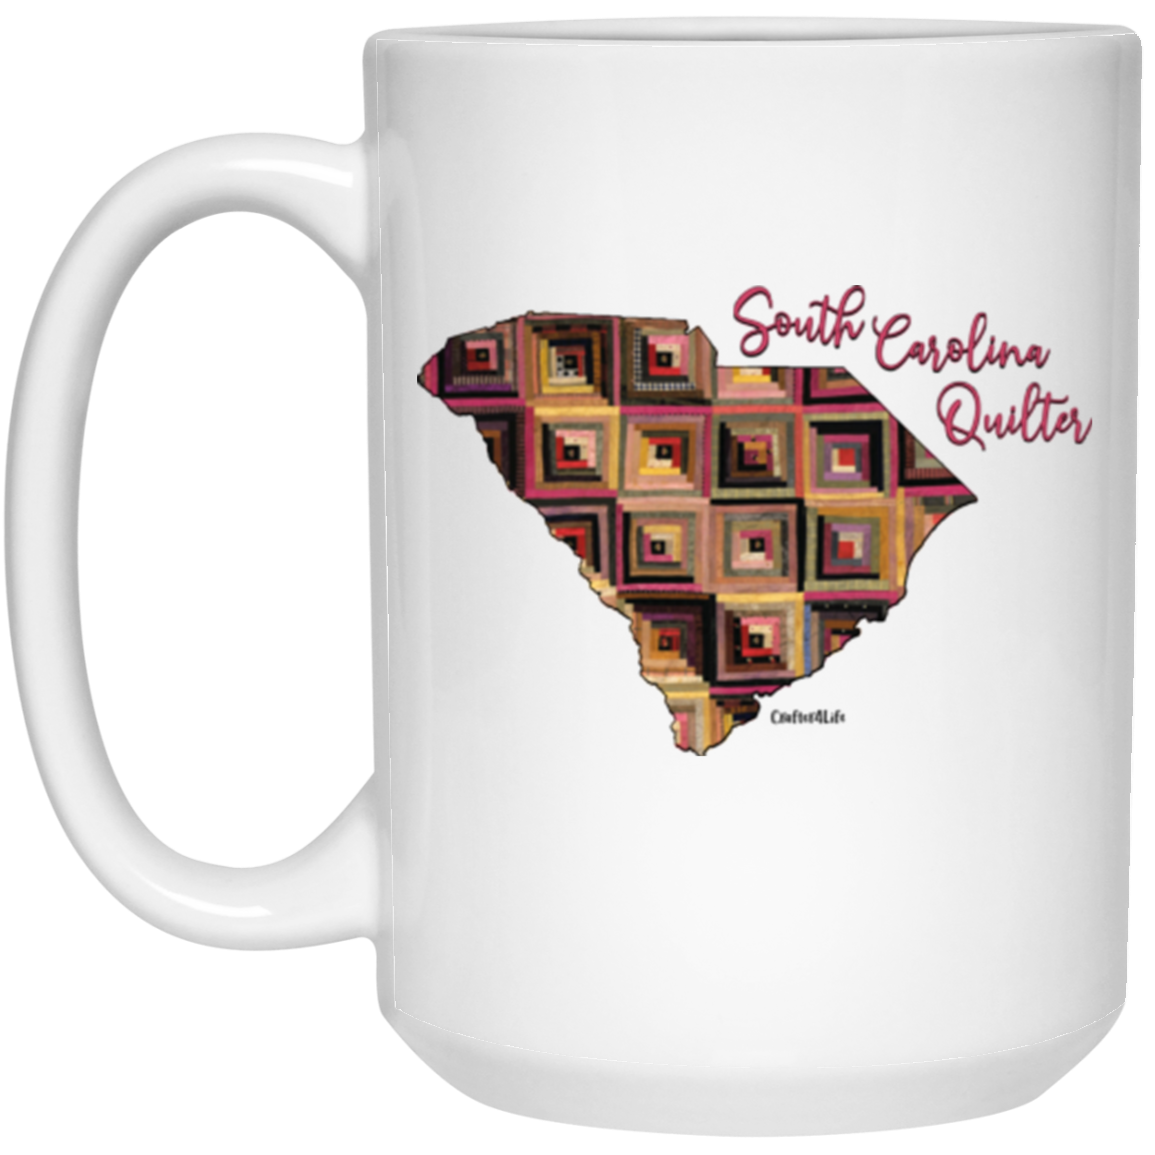 South Carolina Quilter Mugs